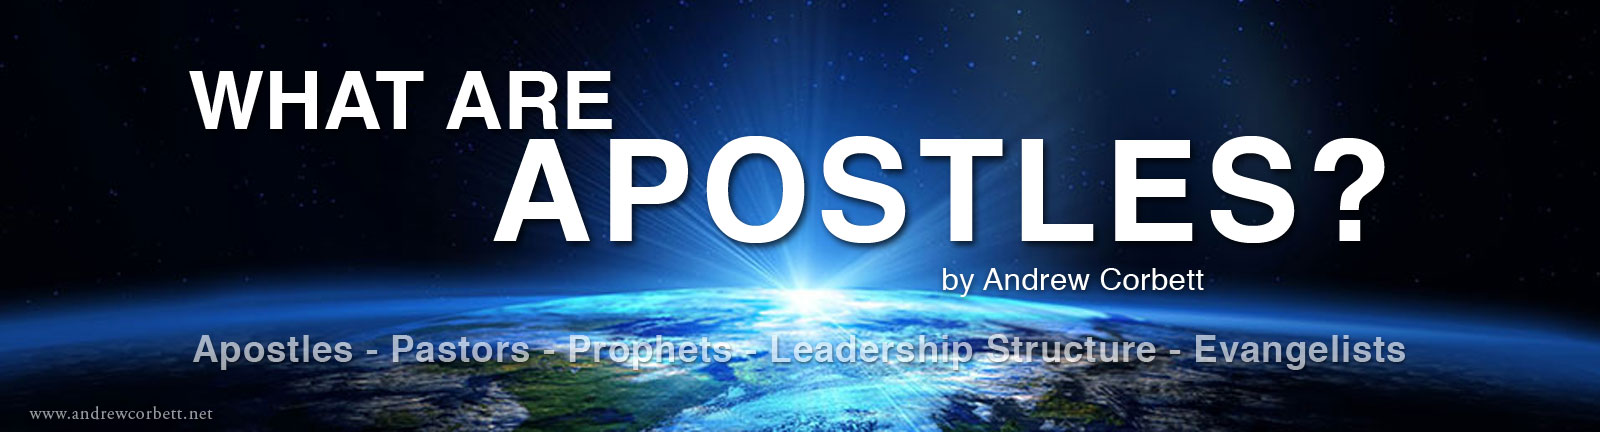 About Apostles